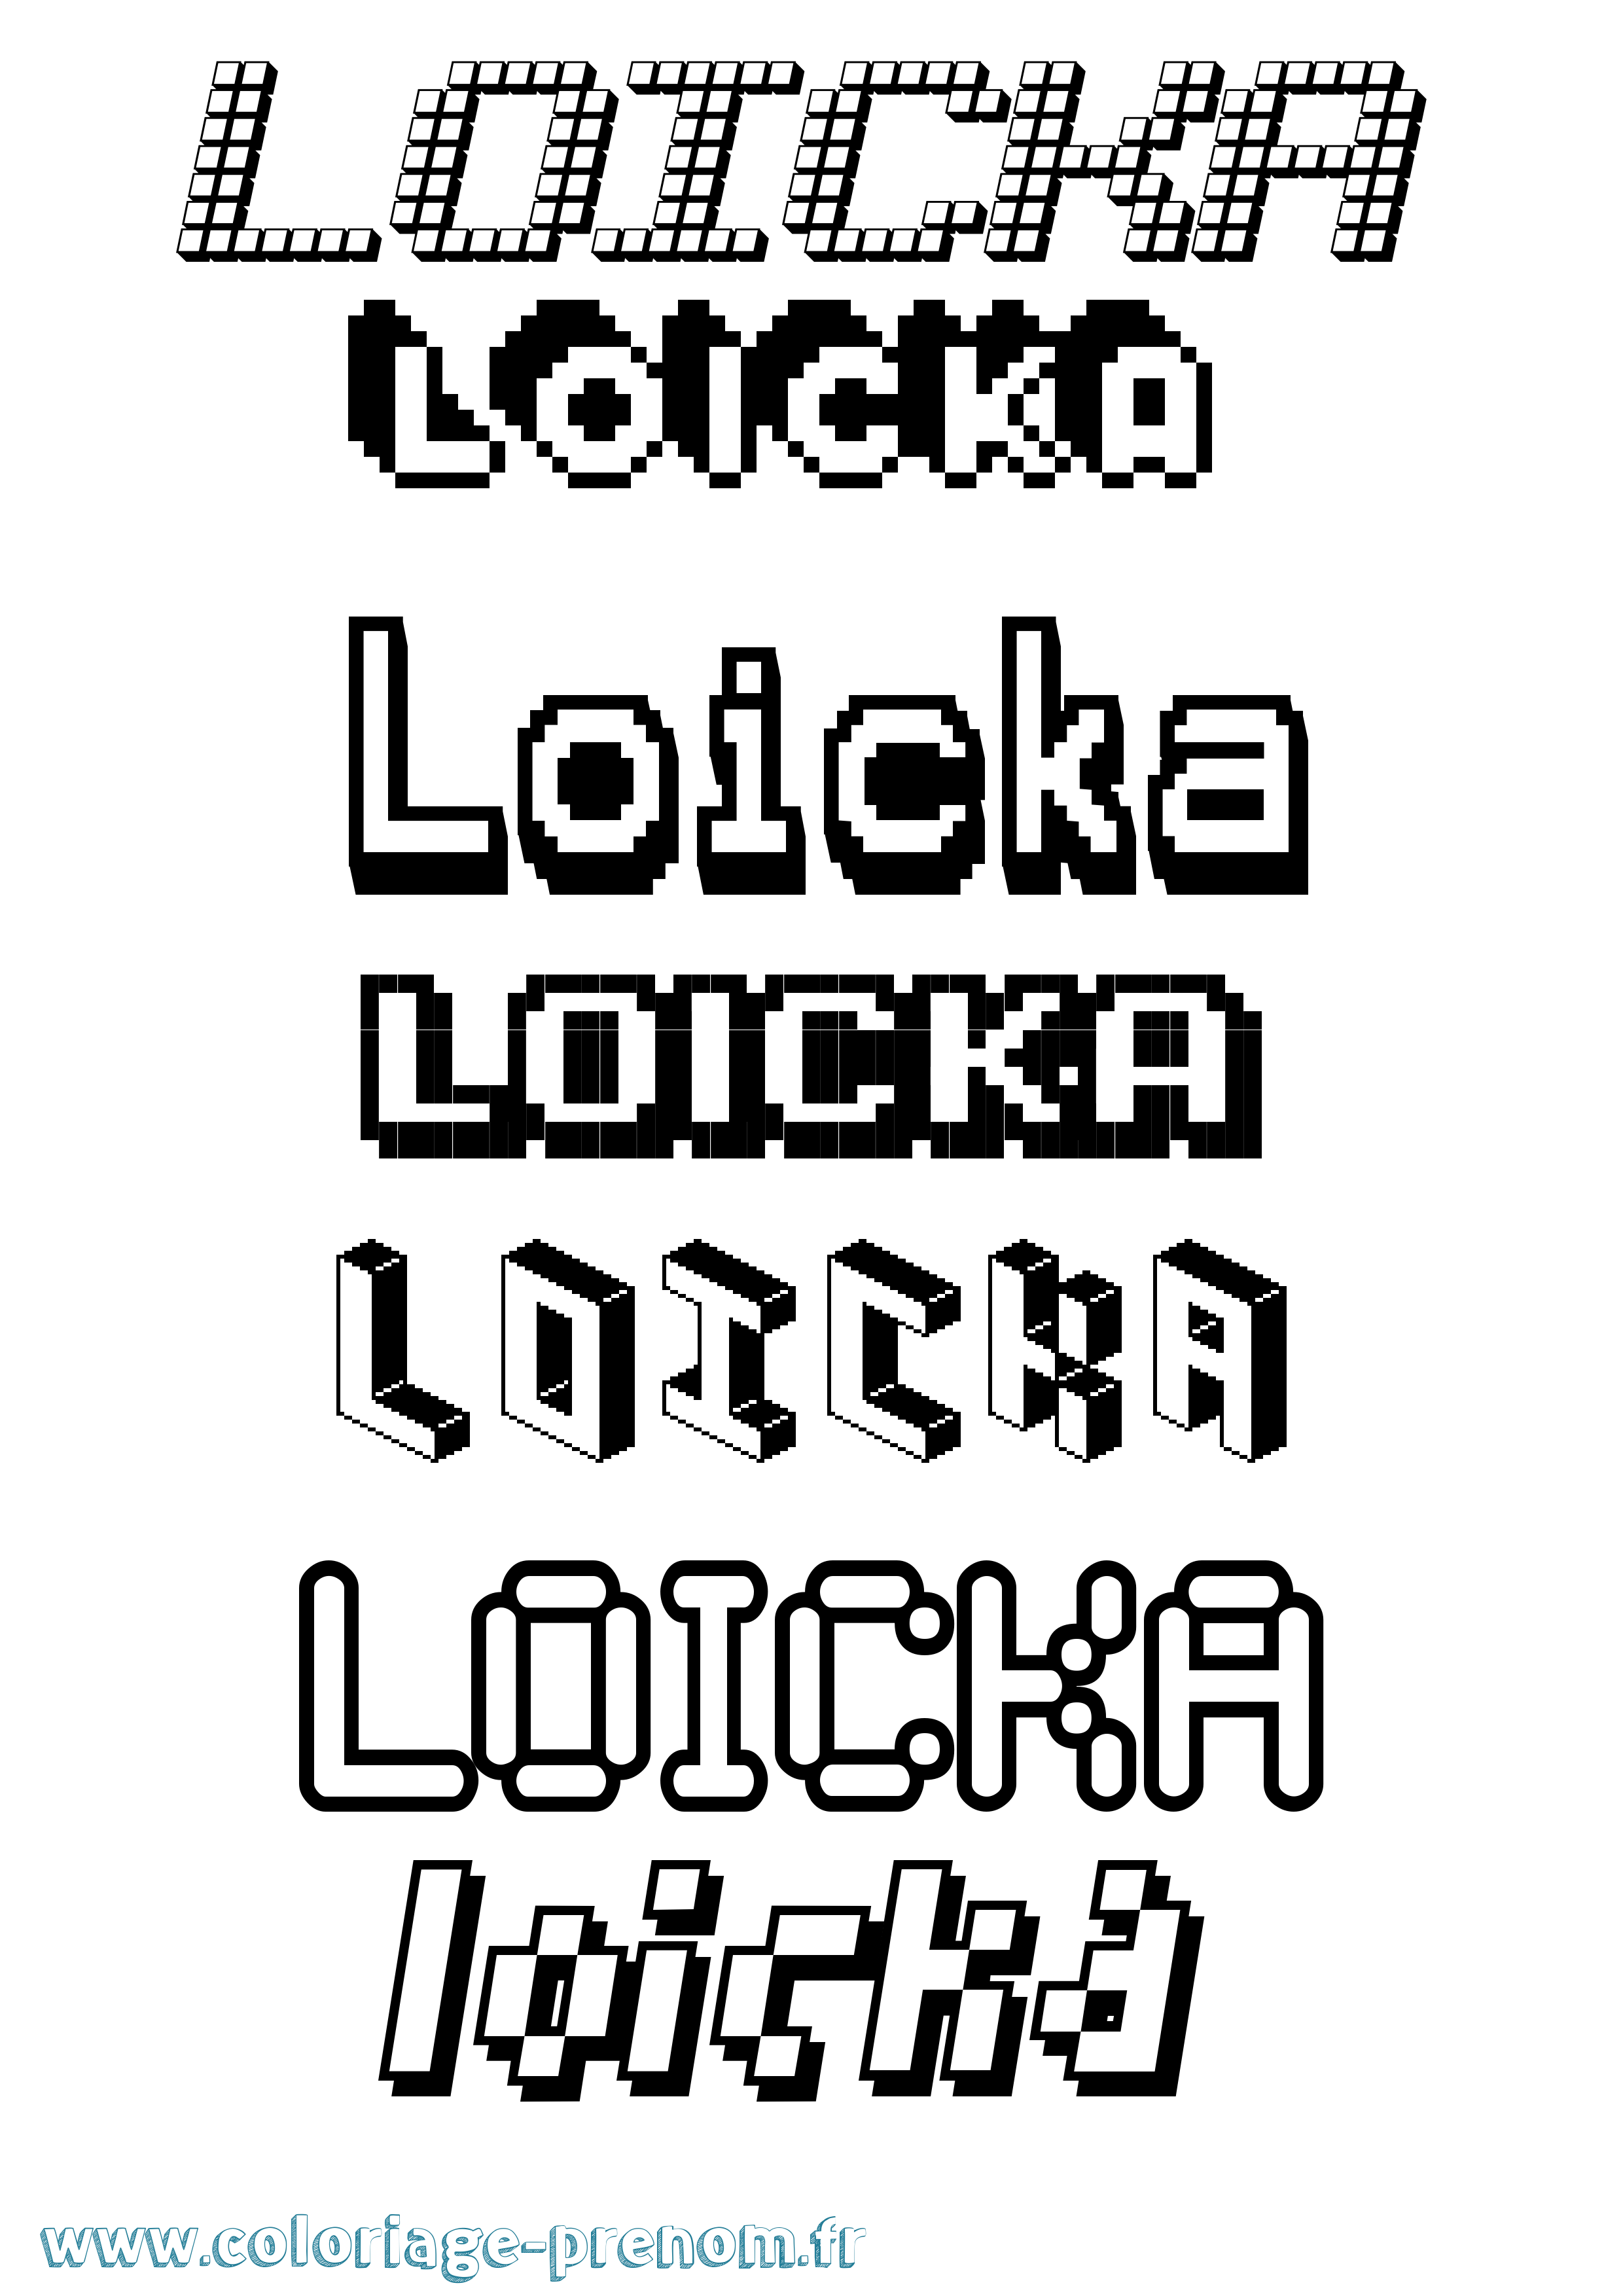 Coloriage prénom Loicka Pixel